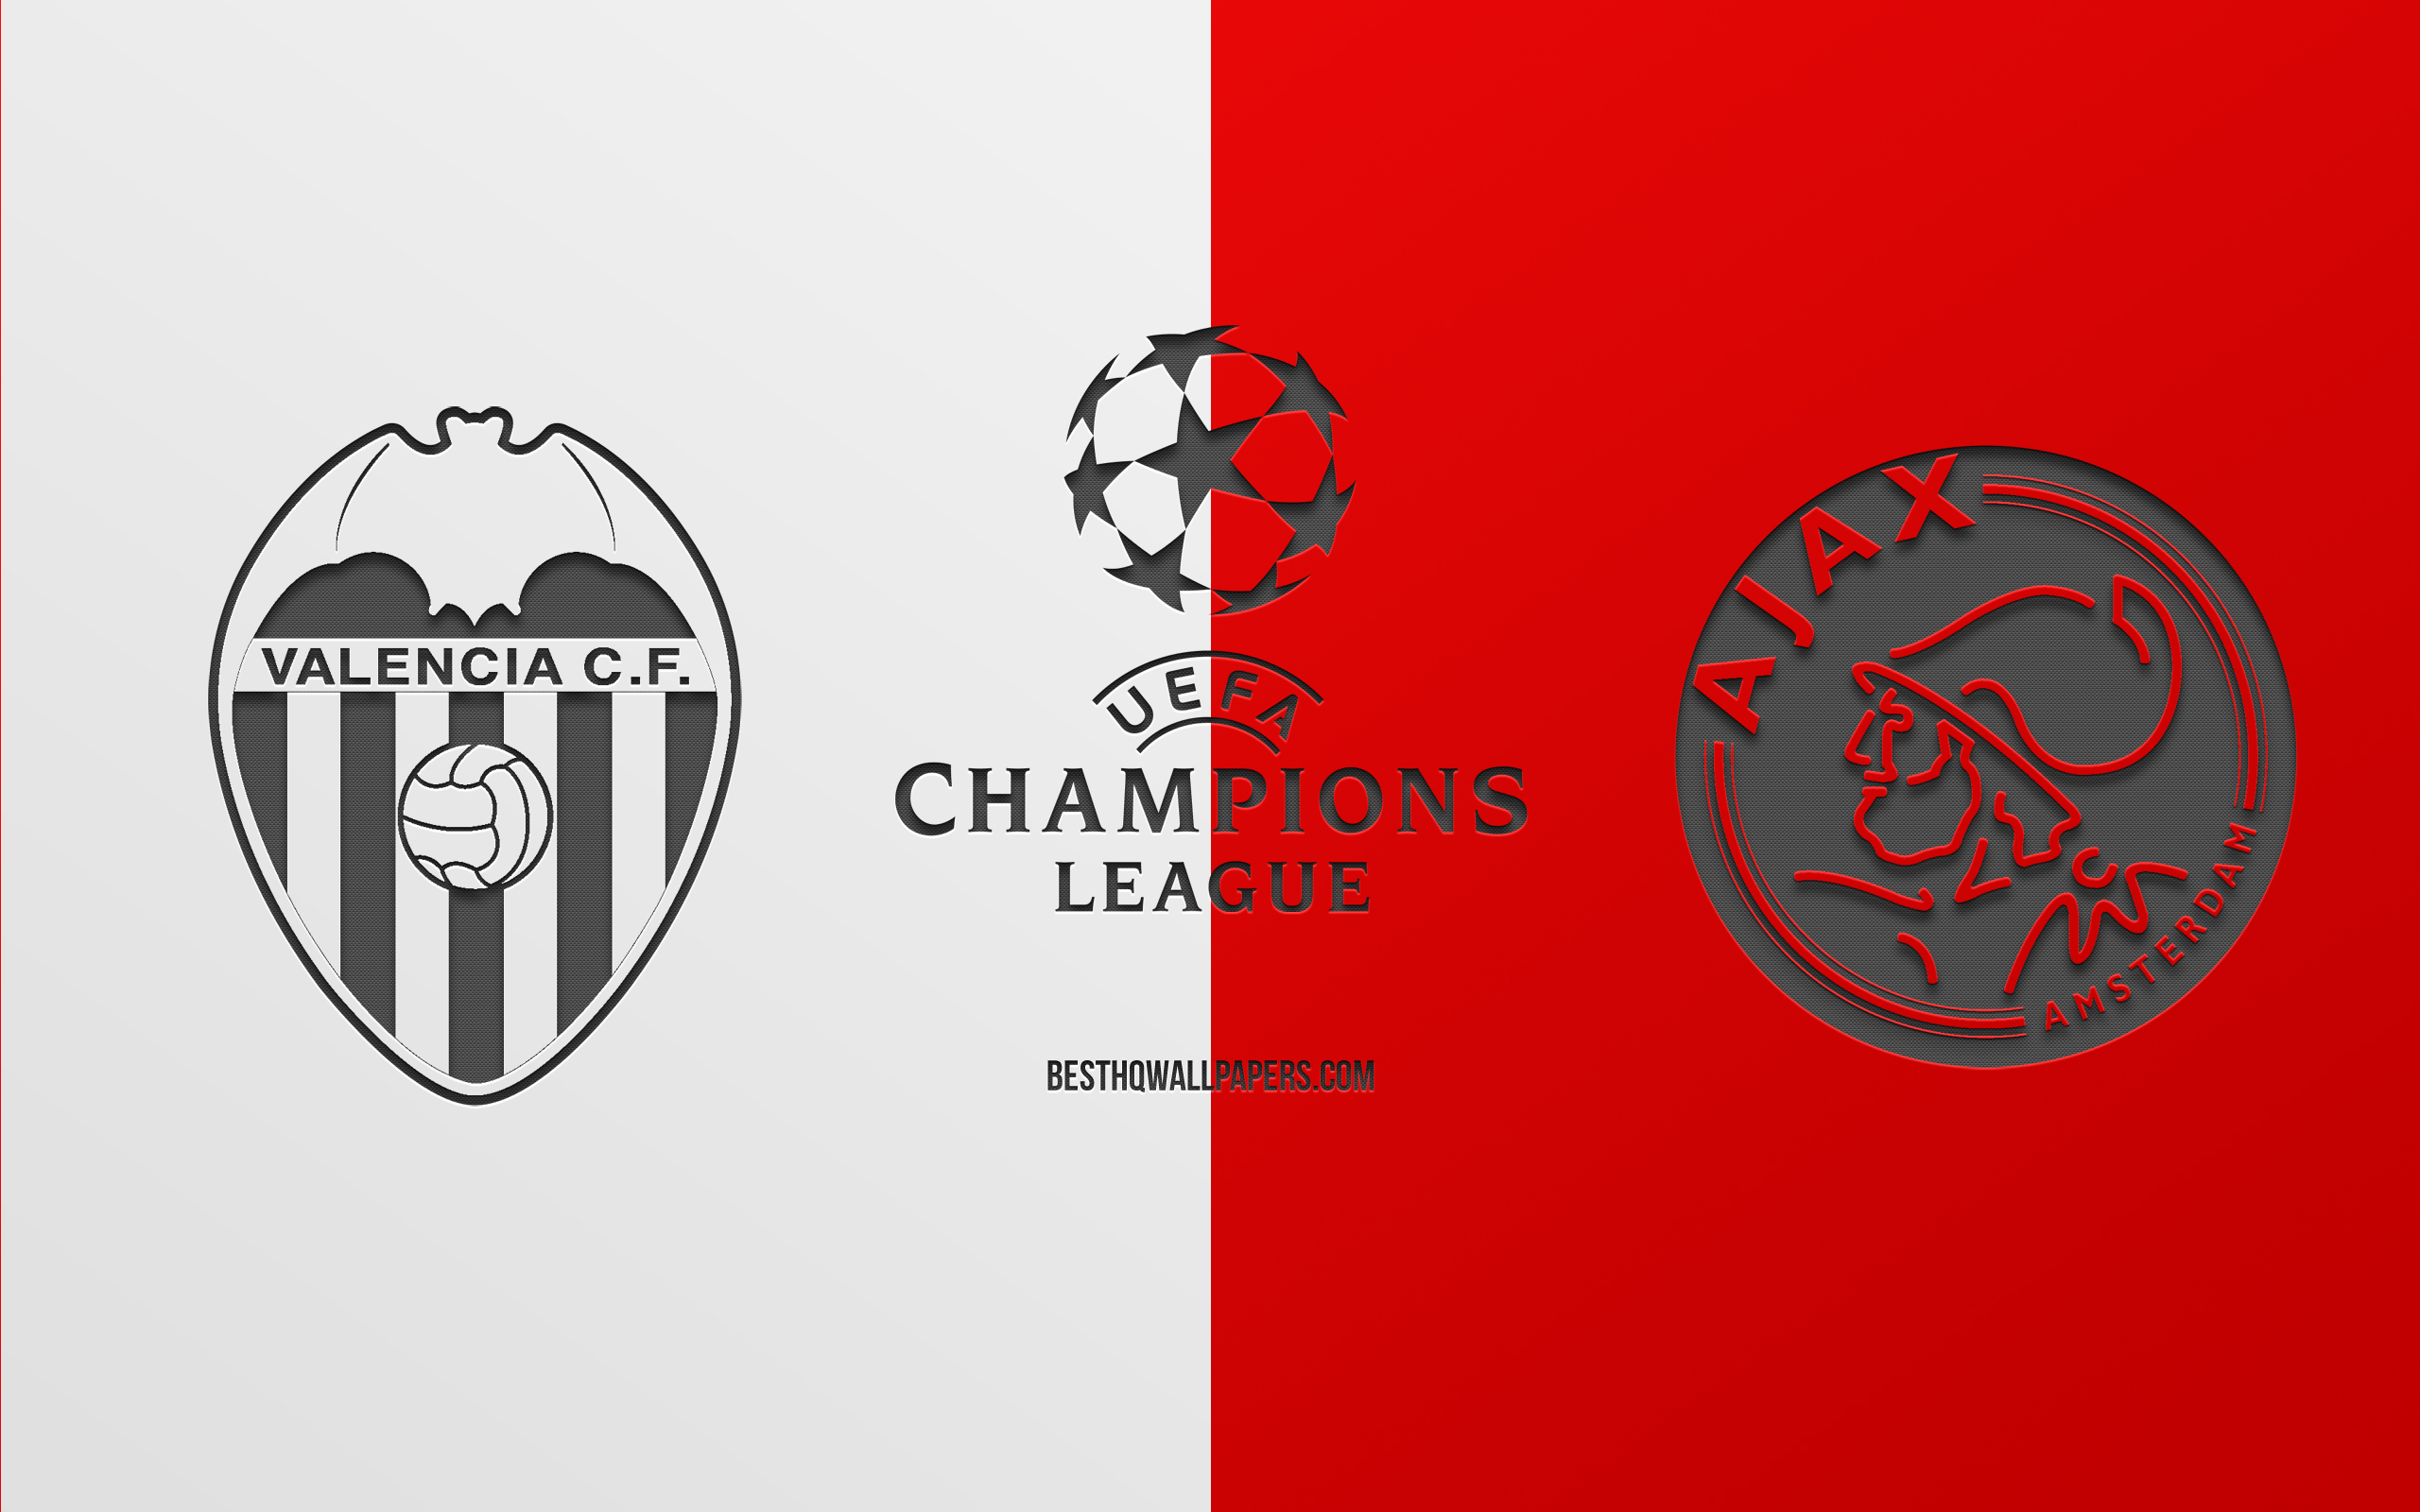 Valencia Cf Vs Ajax Amsterdam, Football Match, 2019 - Graphic Design , HD Wallpaper & Backgrounds